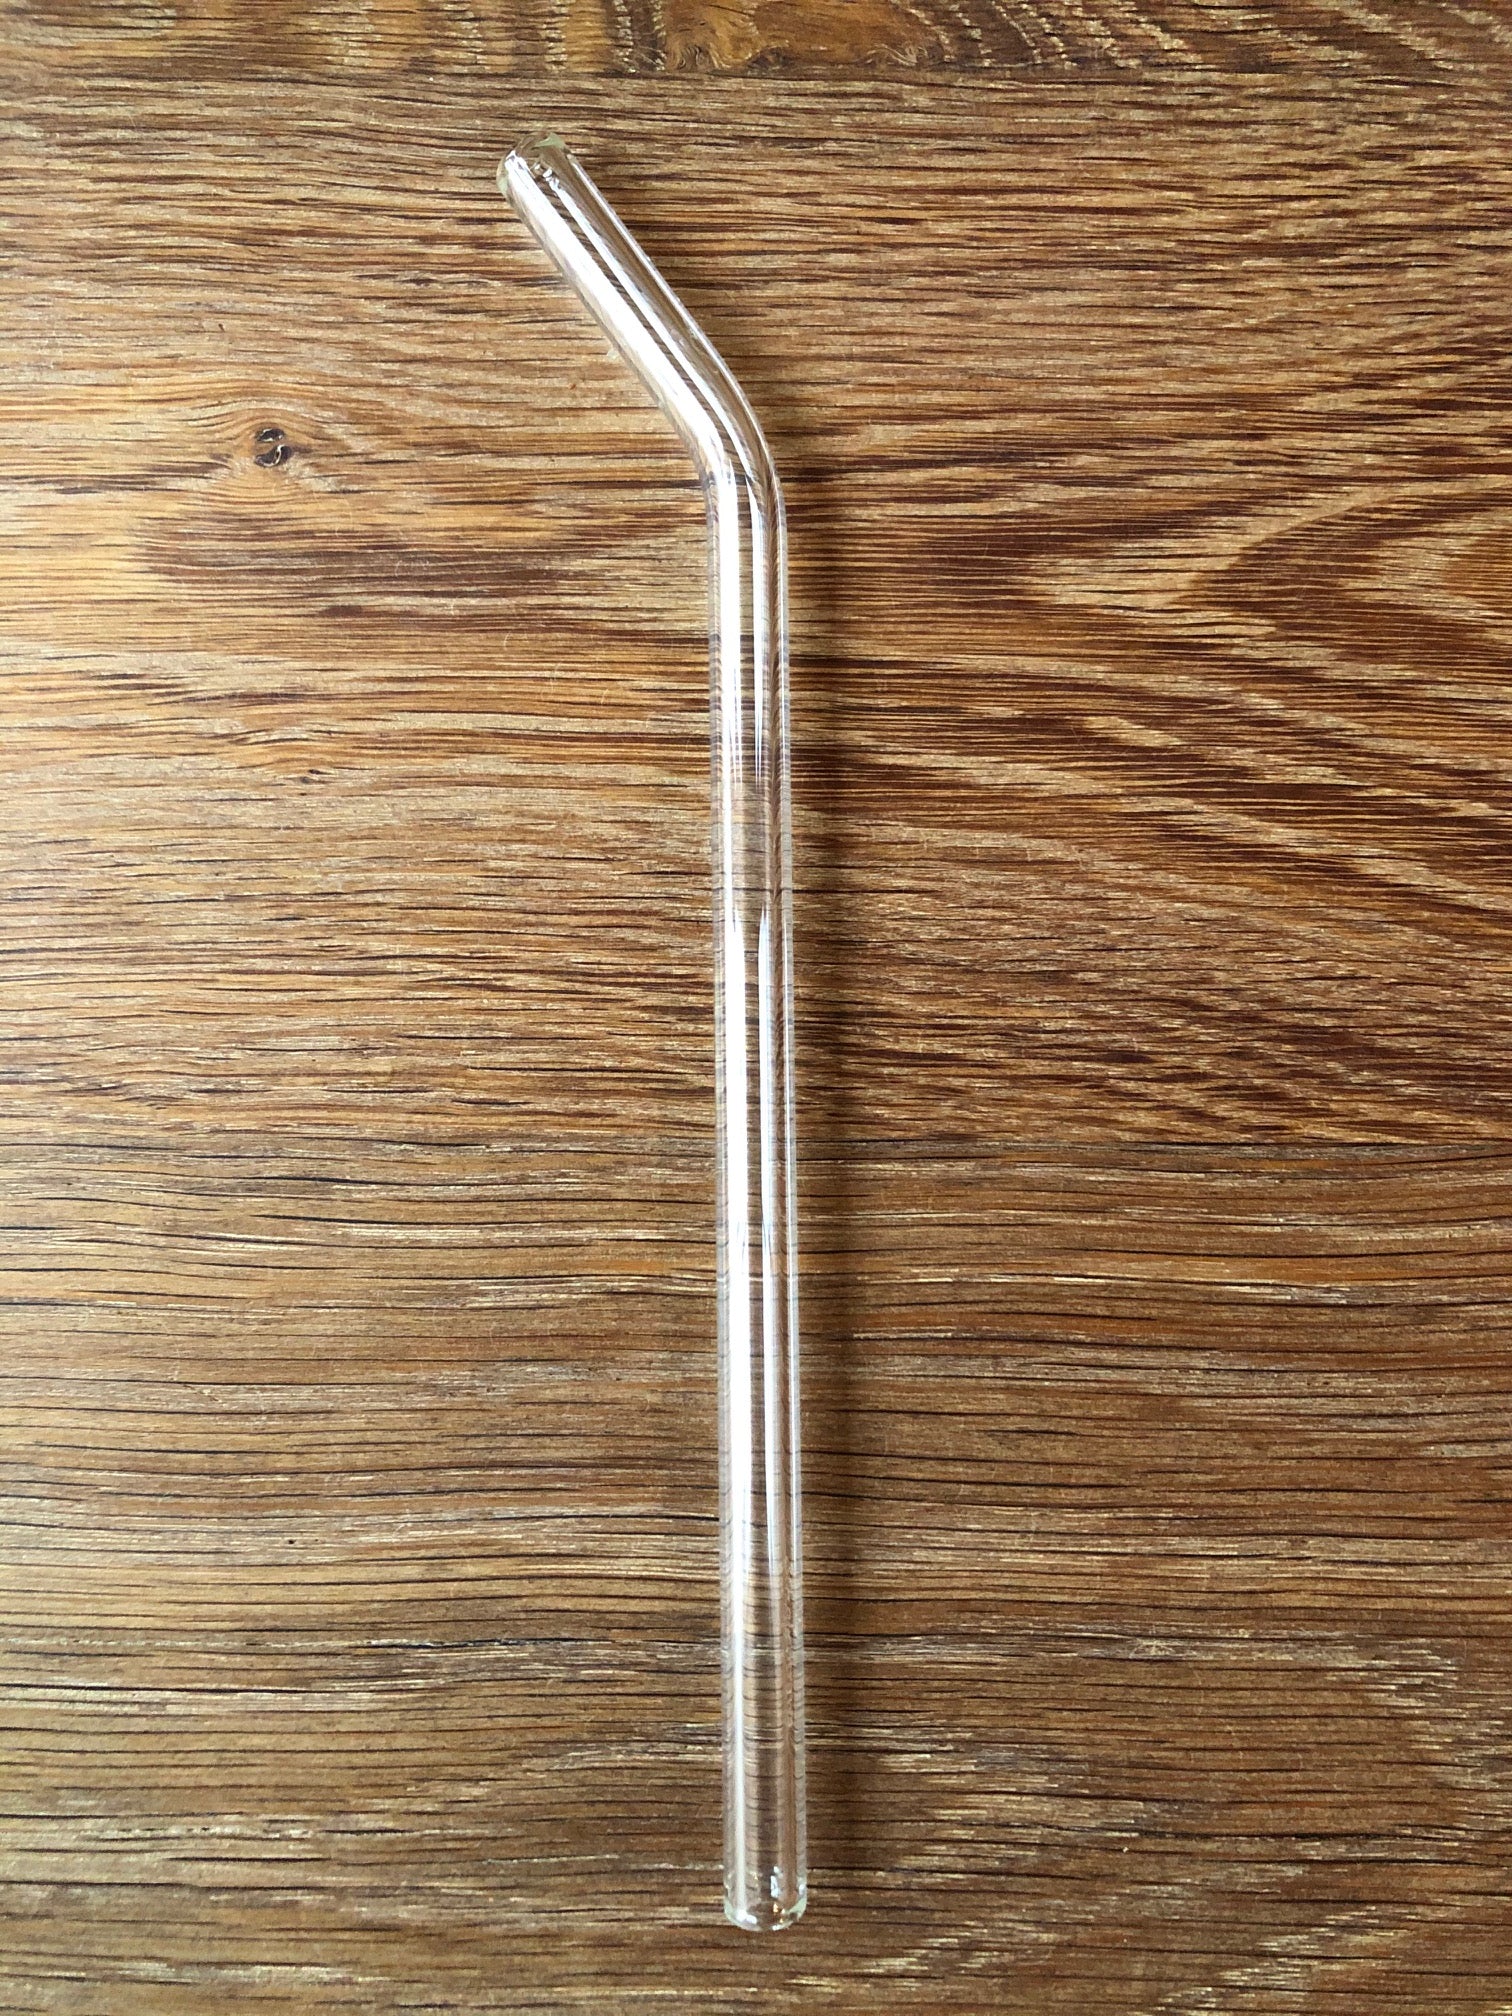 Colored Bent Glass Straws - Single Straw